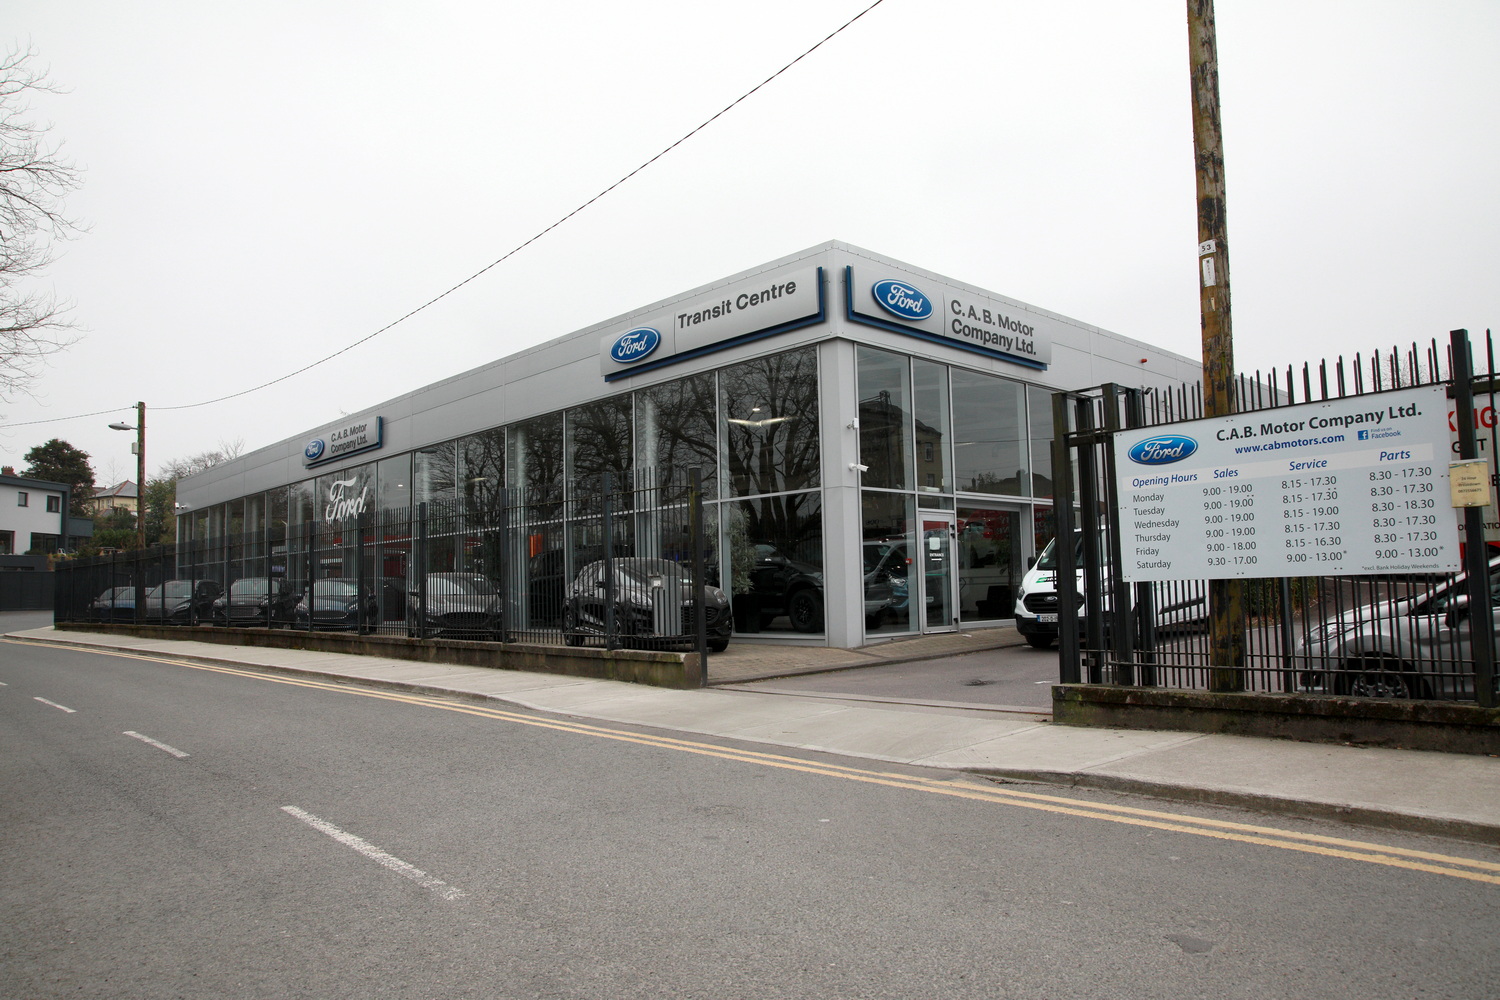 Car Industry News | Joe Duffy to purchase C.A.B. Motors in Cork | CompleteCar.ie